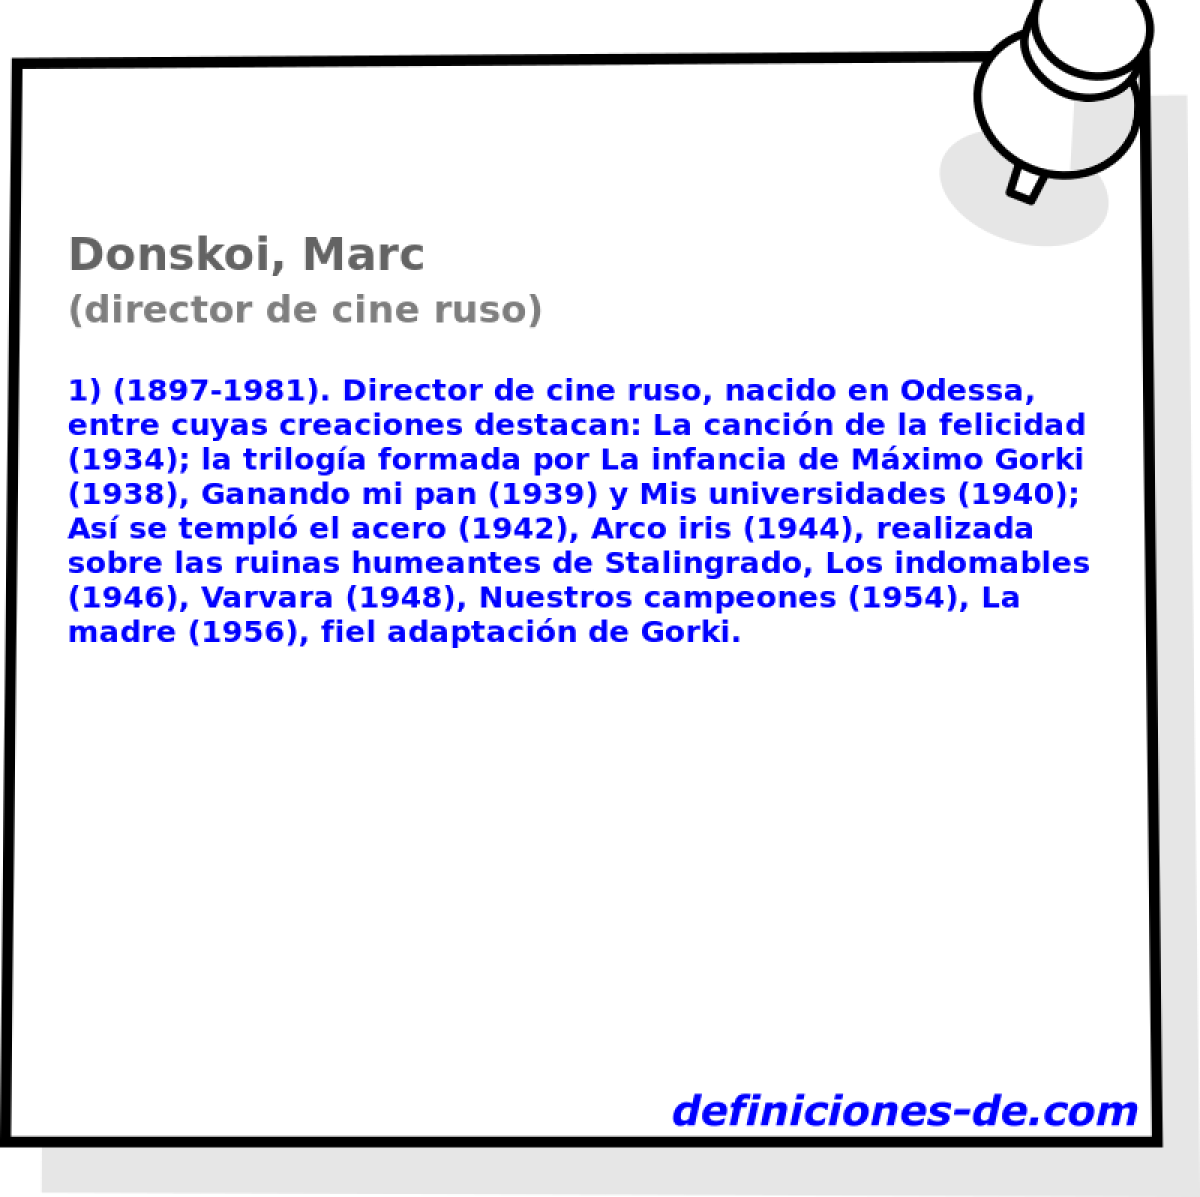 Donskoi, Marc (director de cine ruso)